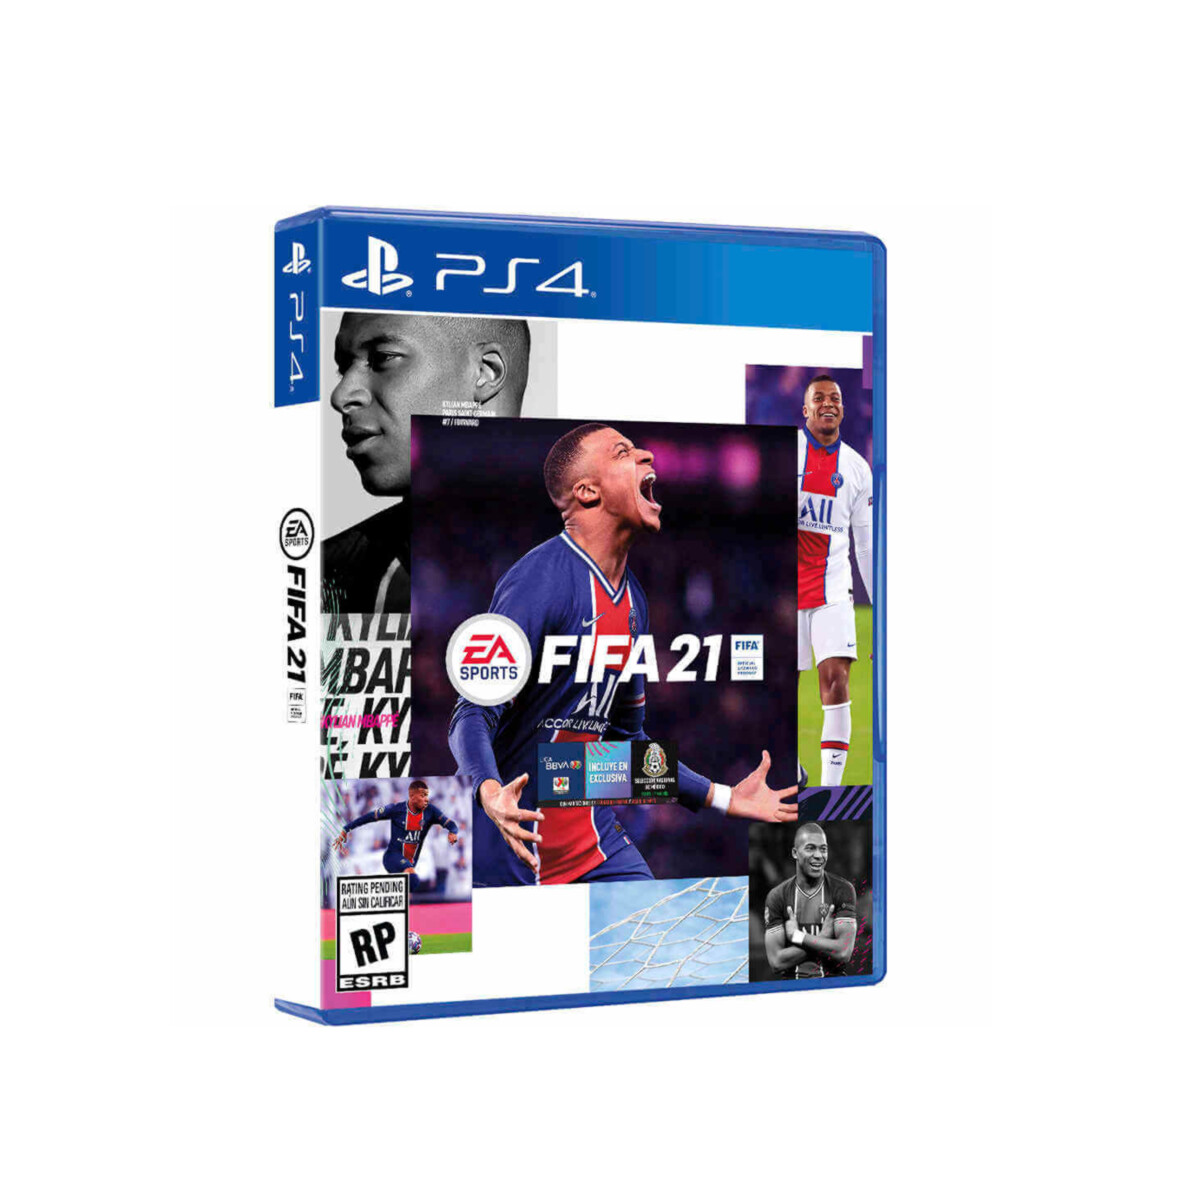 PS4 FIFA 21 